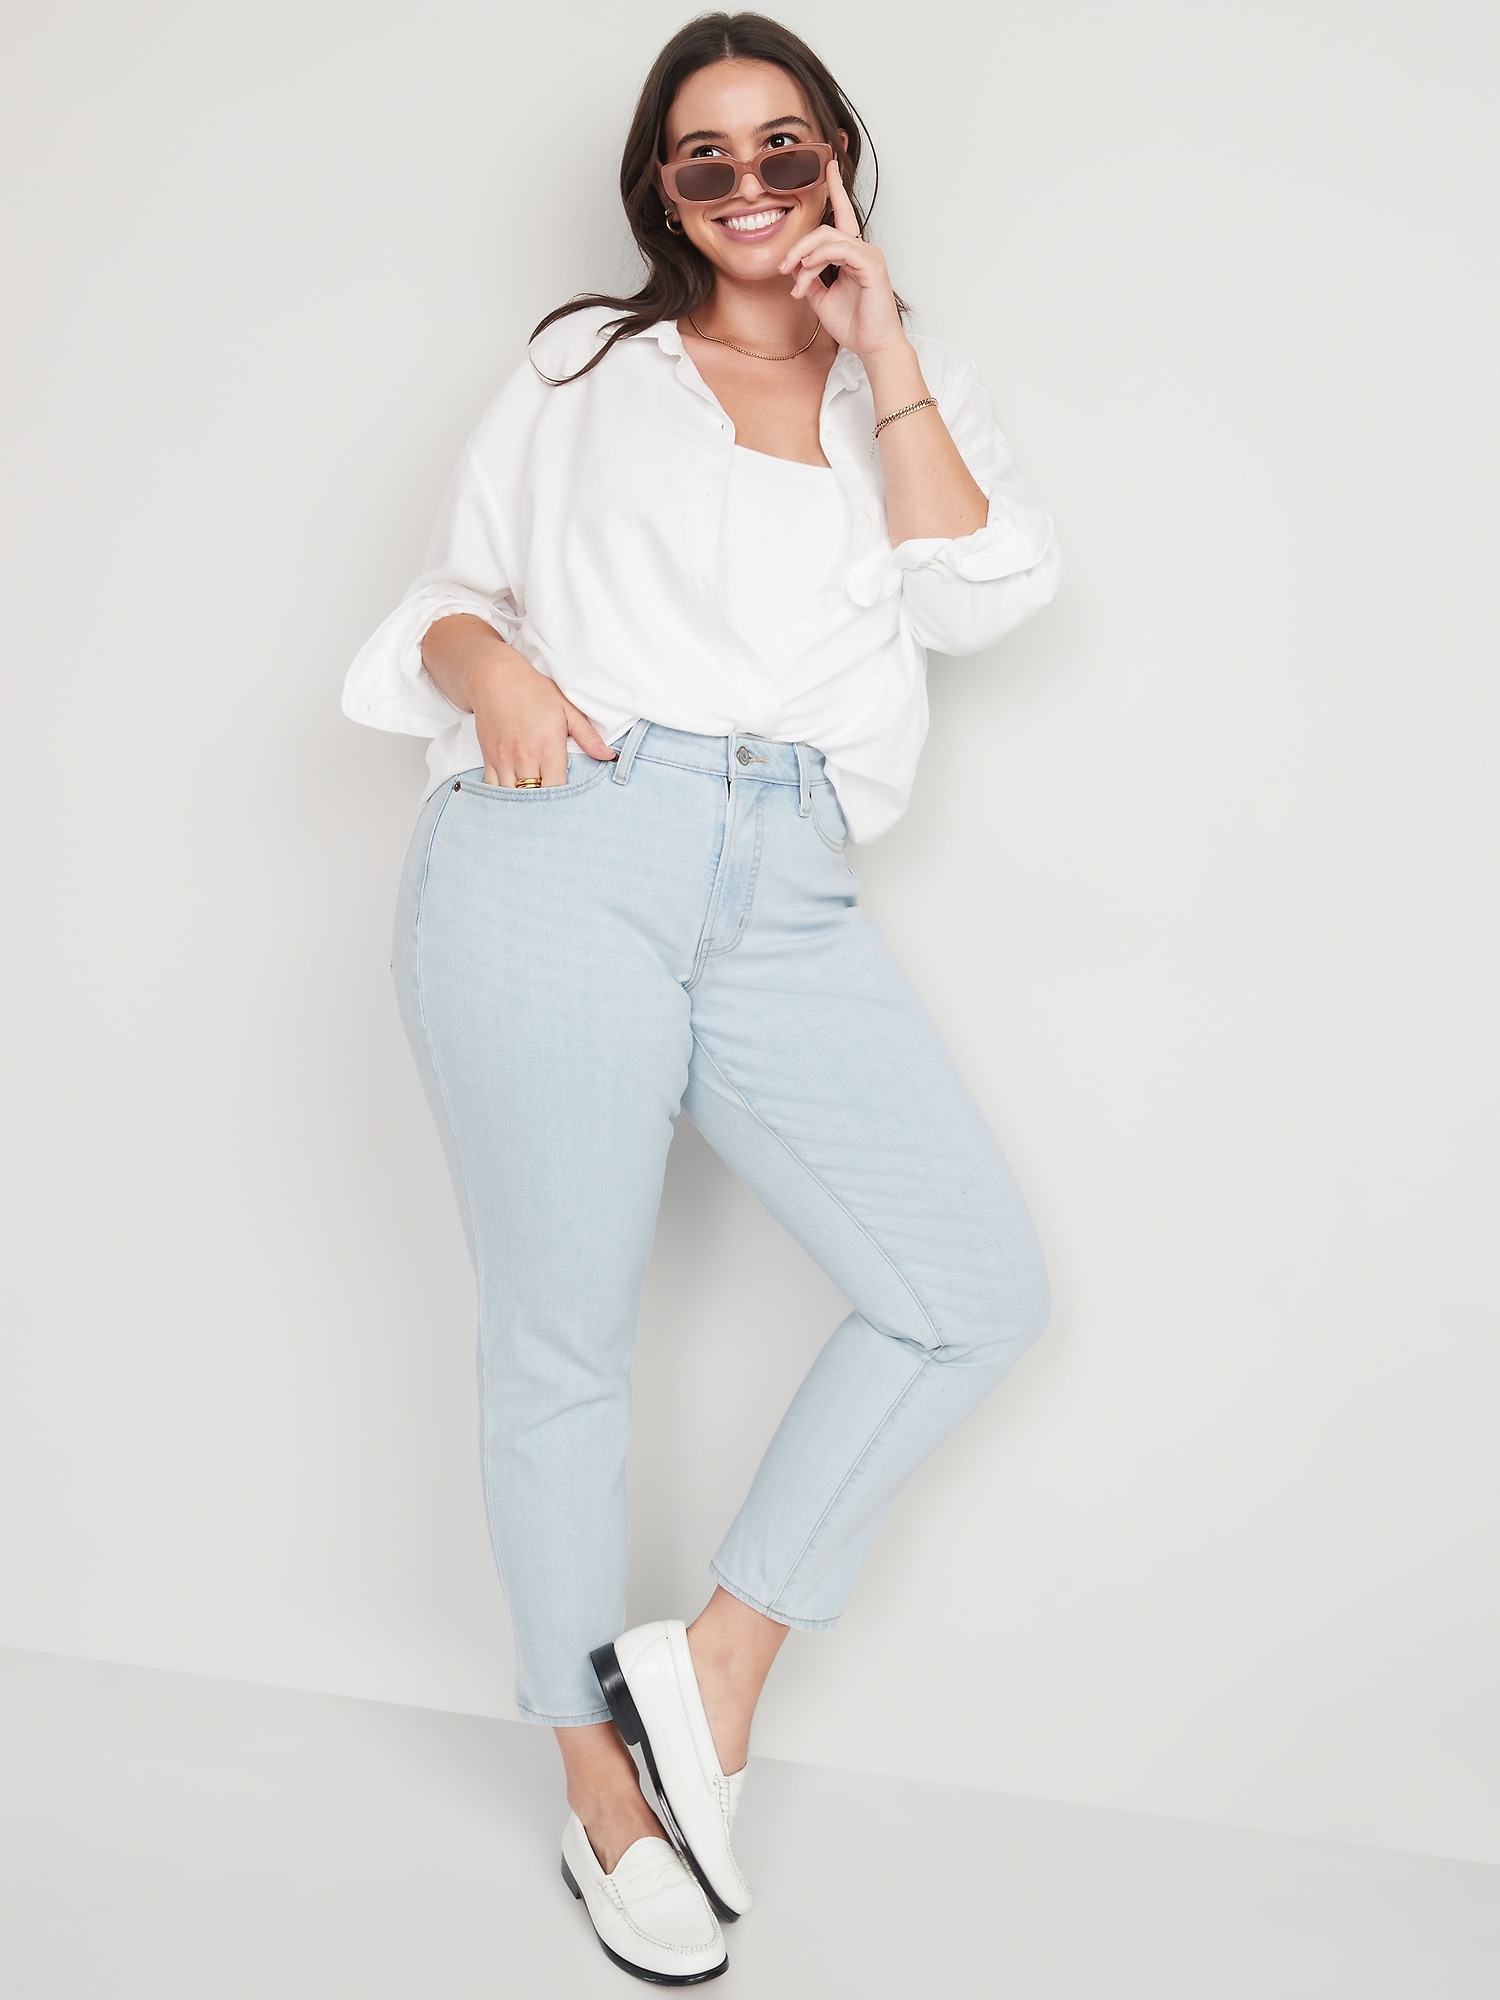 Old Navy Curvy Profile Denim Blue Jeans Women's Size 16 Short